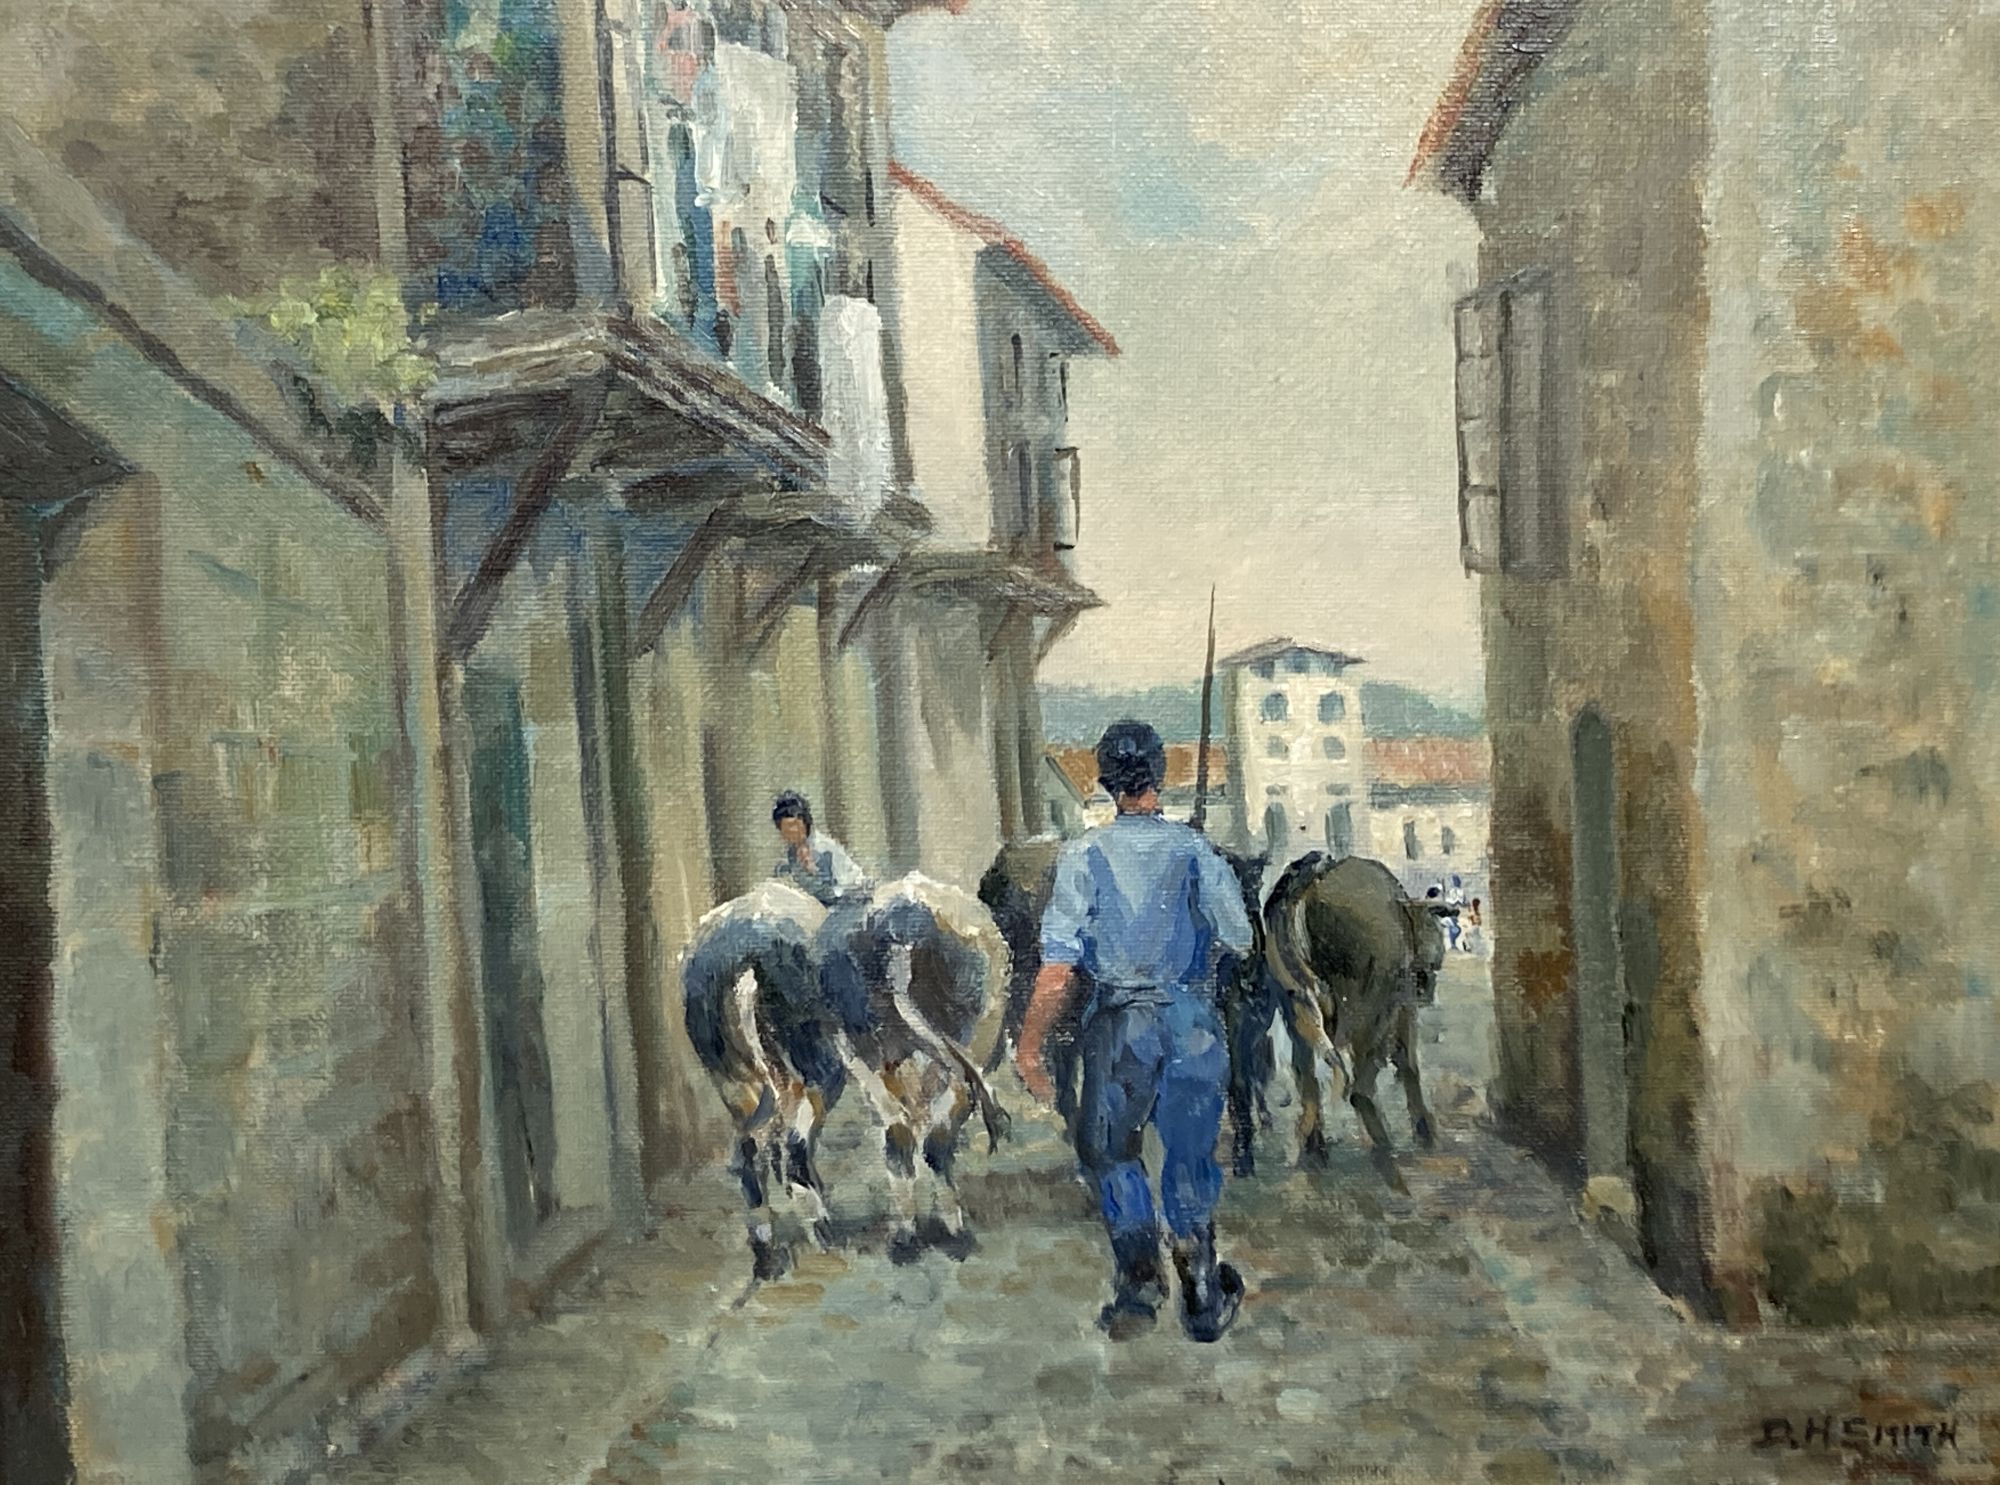 D. H. Smith, oil on board, Cow herd in an Italian street, signed, 34 x 44cm